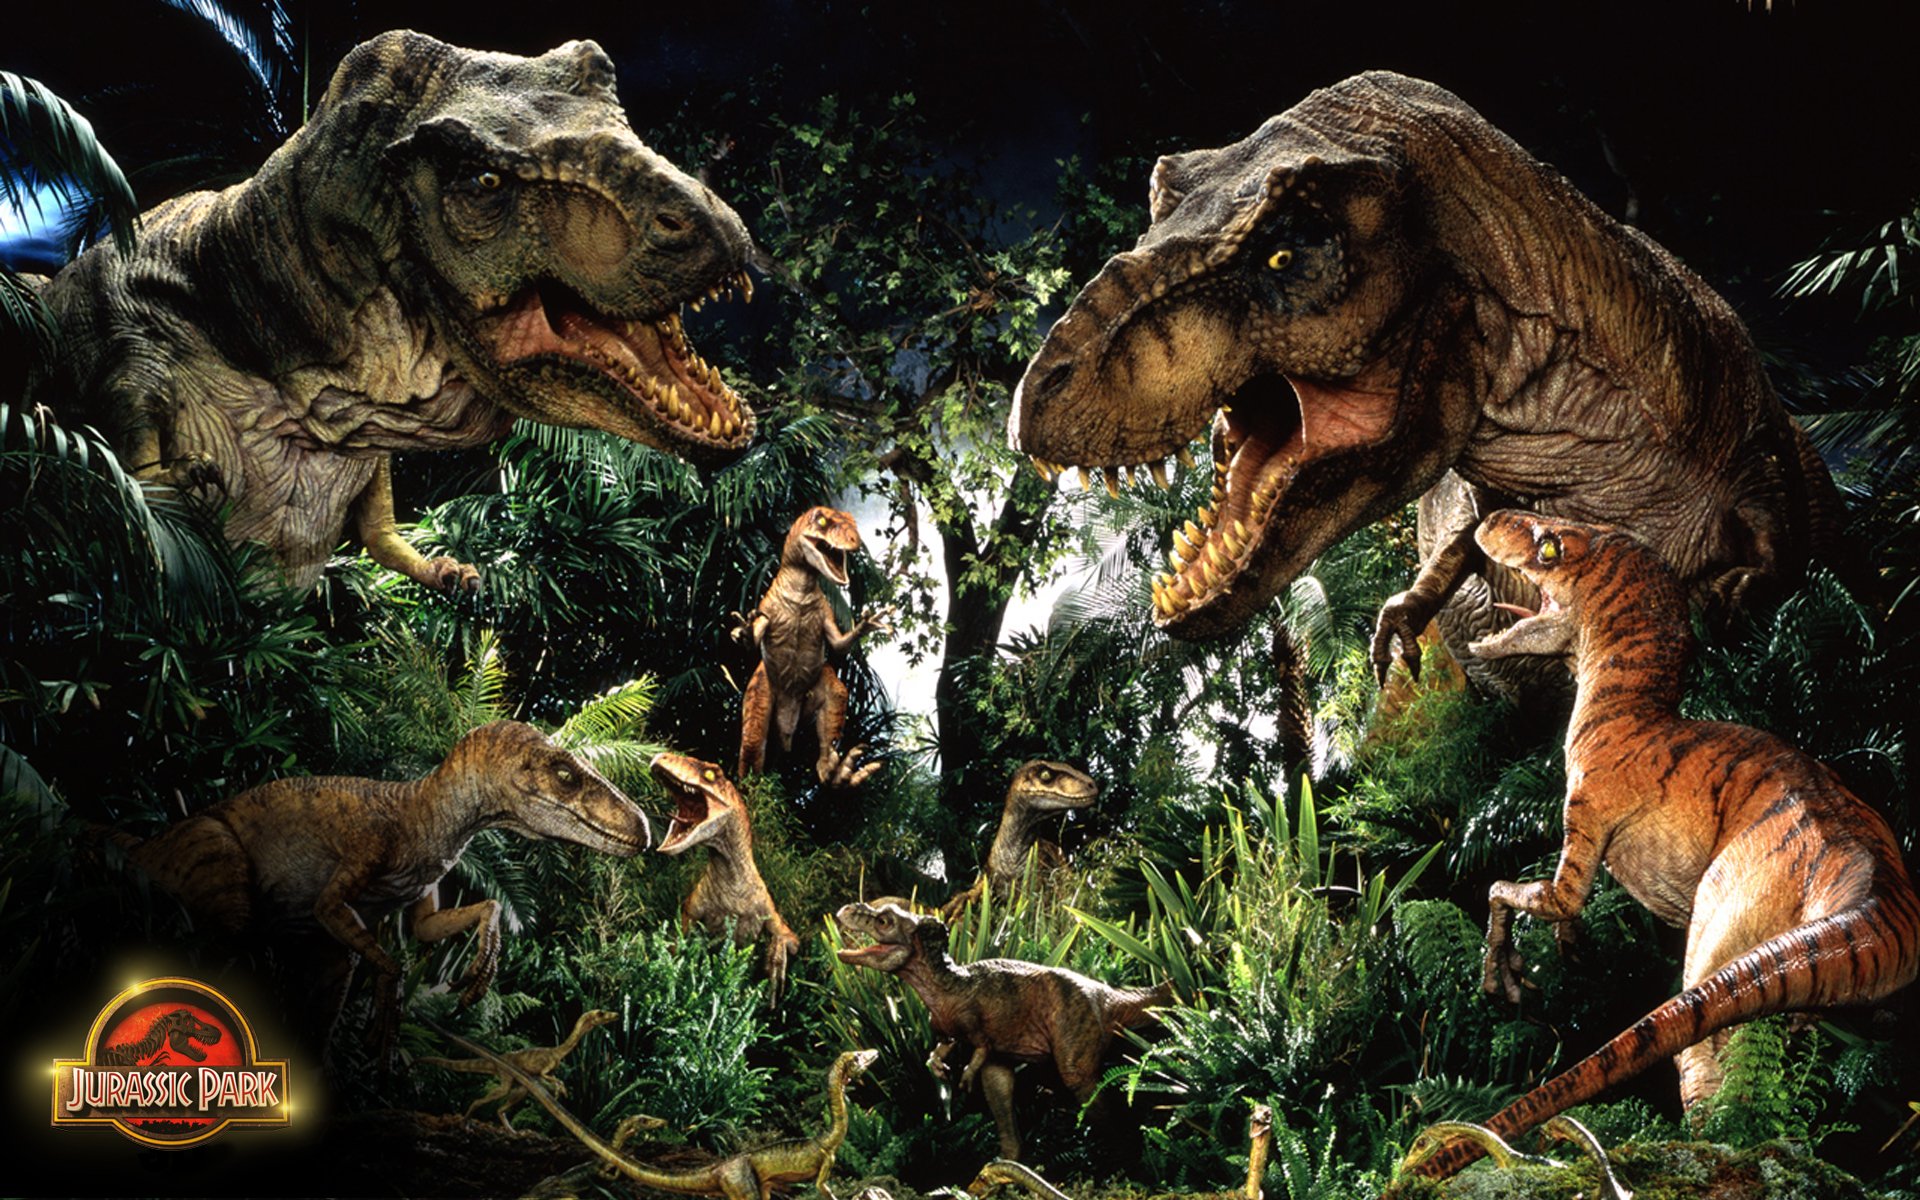  fantasy dinosaur movie film poster jungle forest wallpaper background